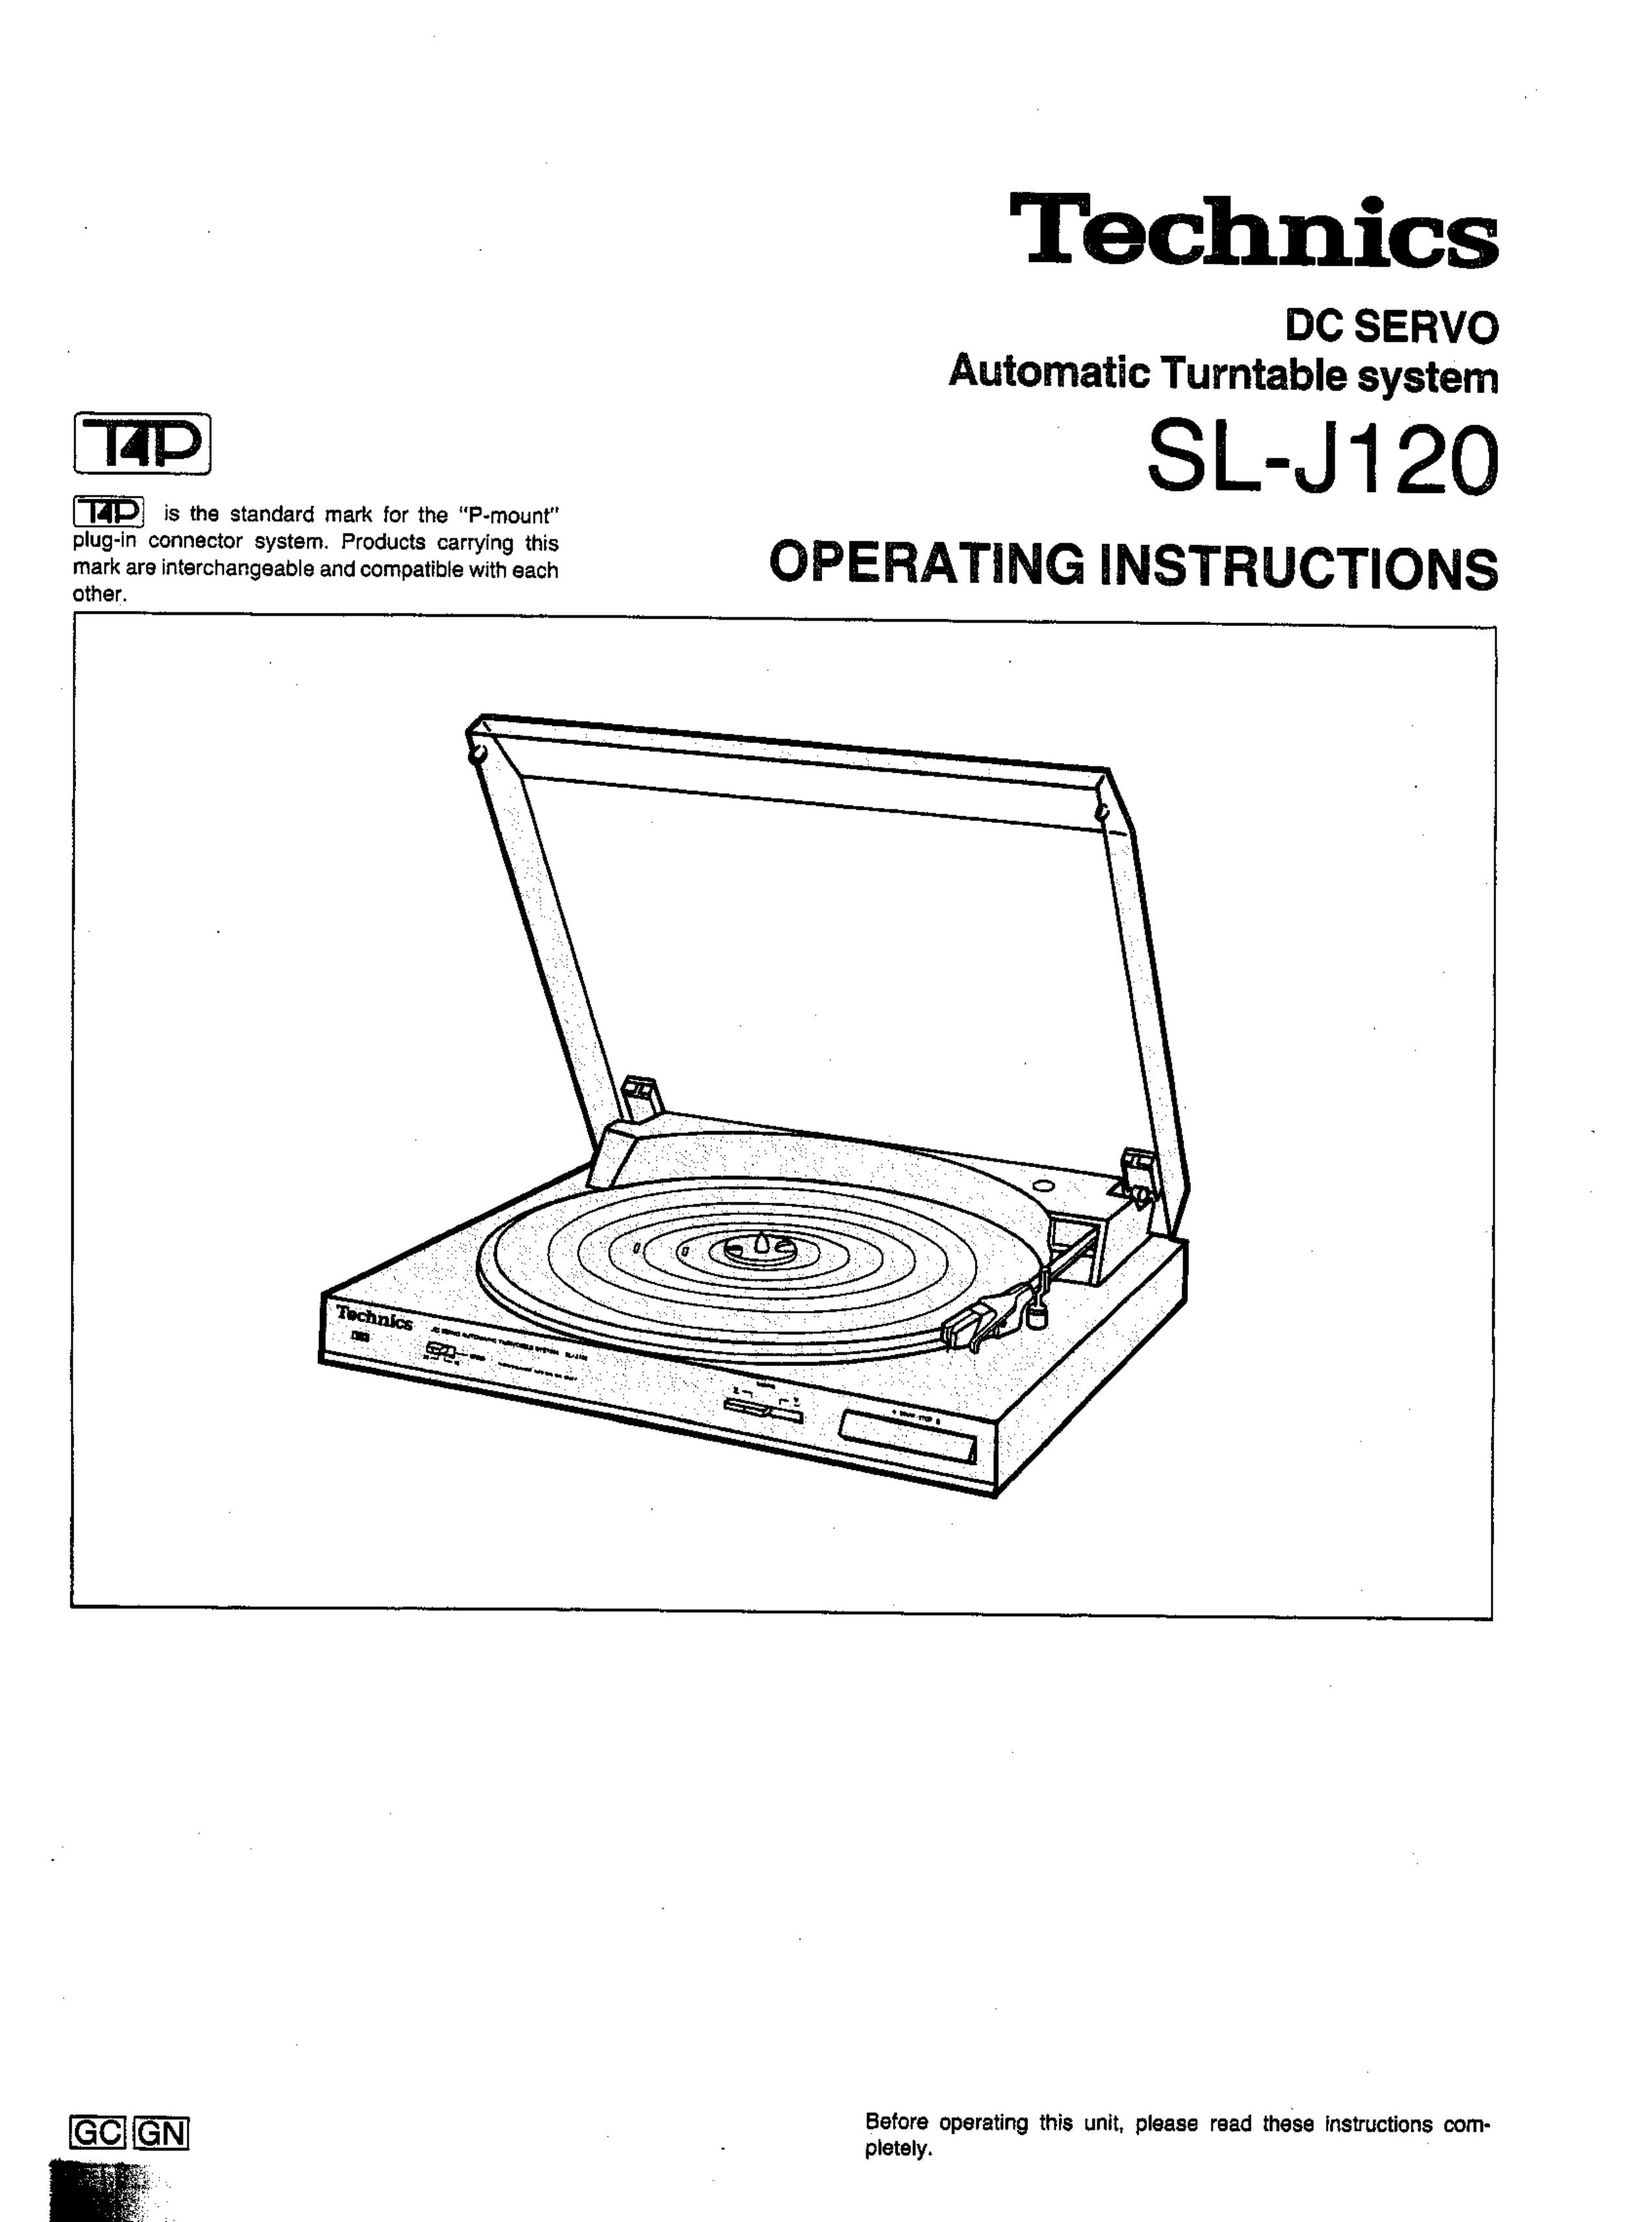 Panasonic SL-J120 Turntable User Manual